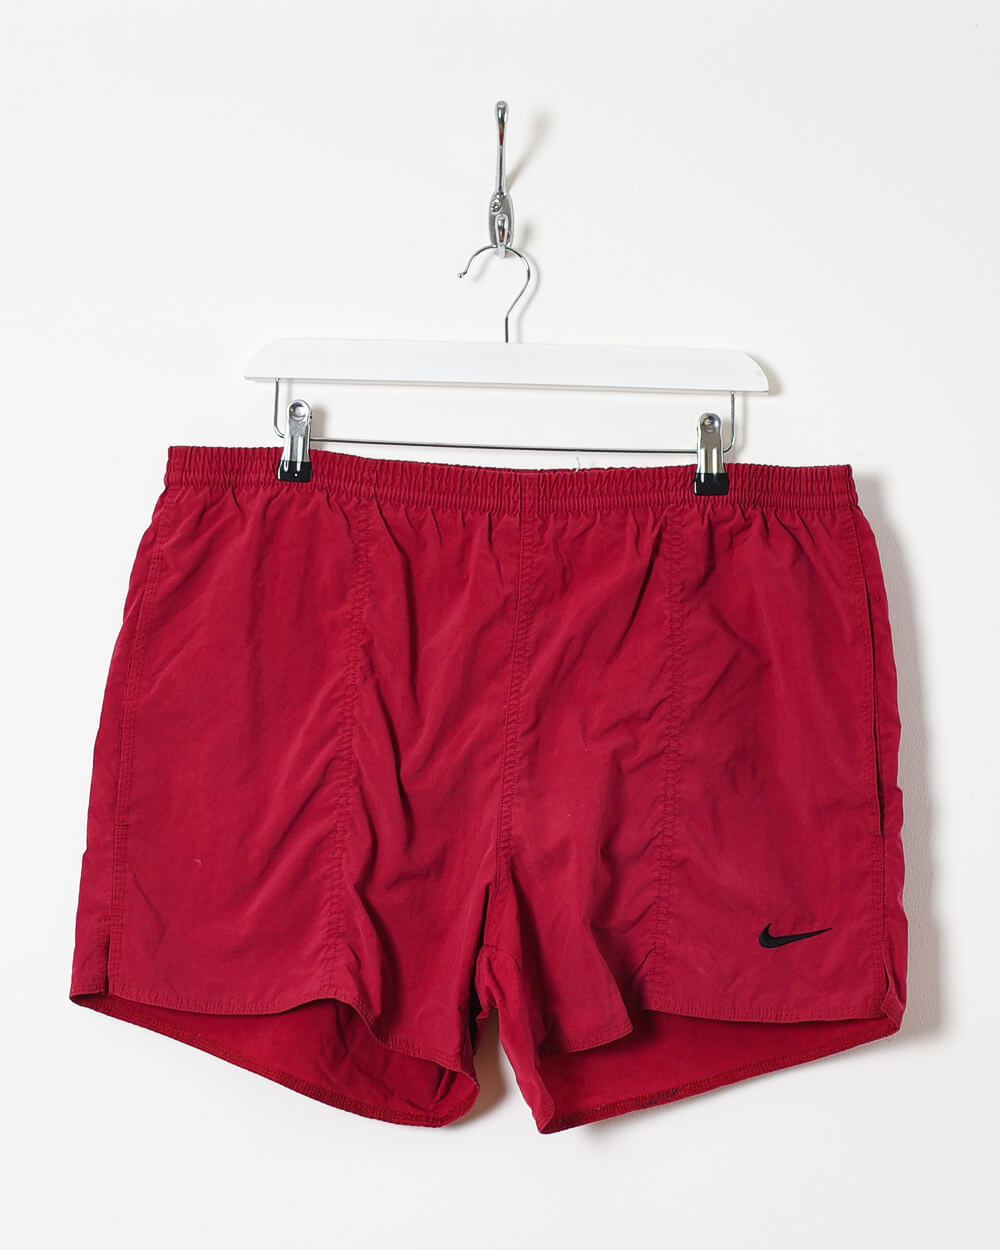 Maroon Nike Shorts - W36